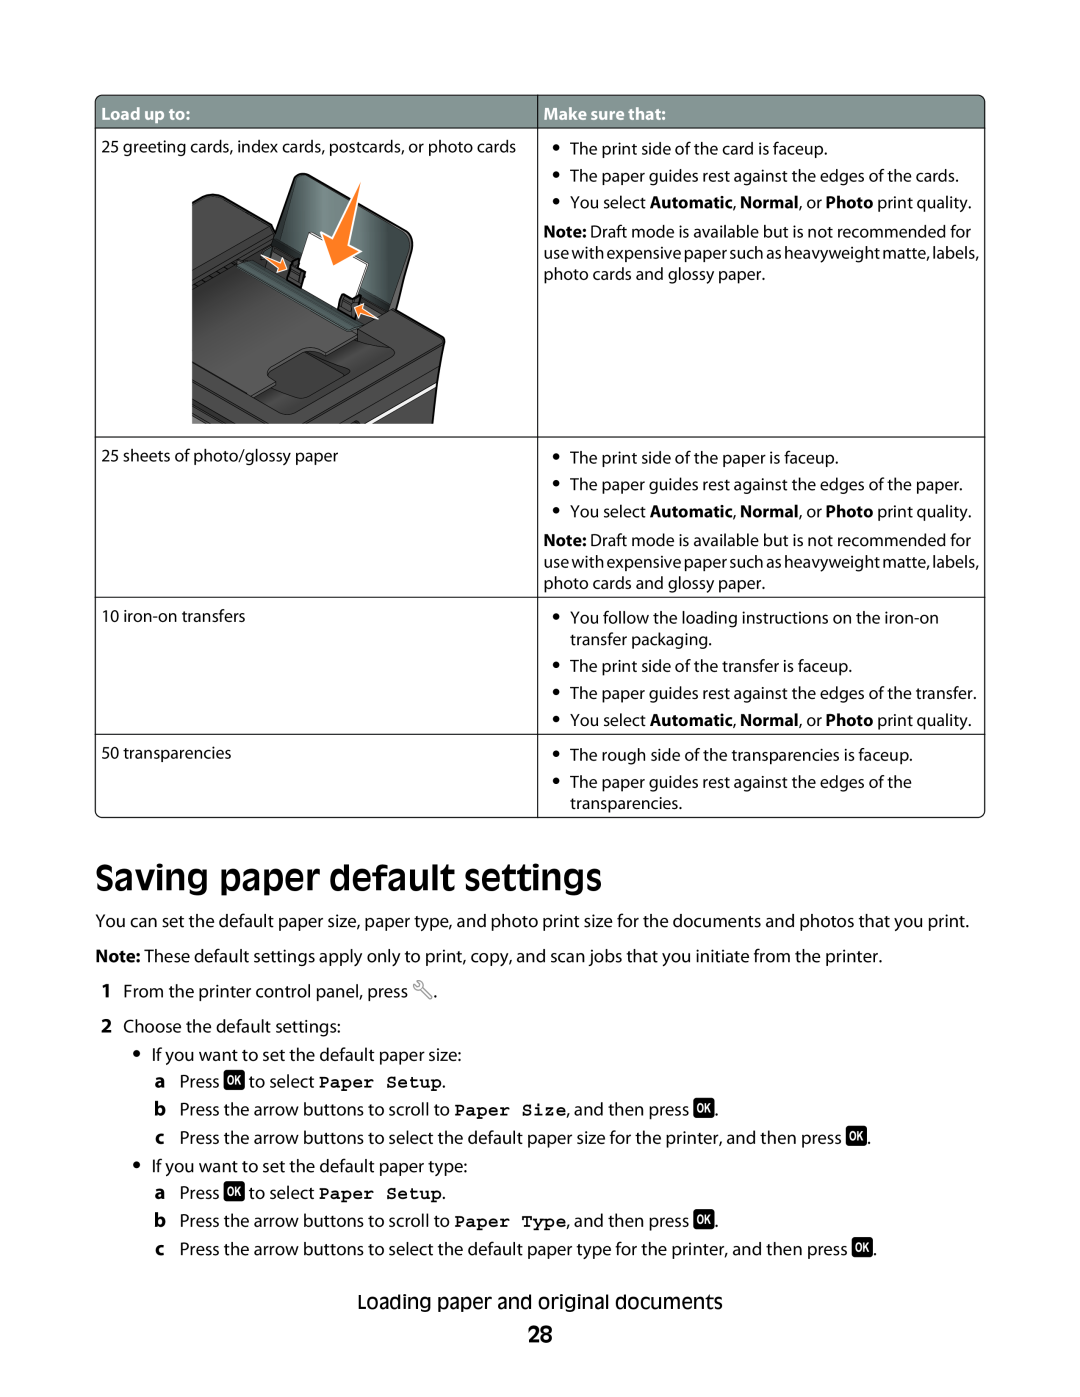 Dell V515W manual Saving paper default settings 